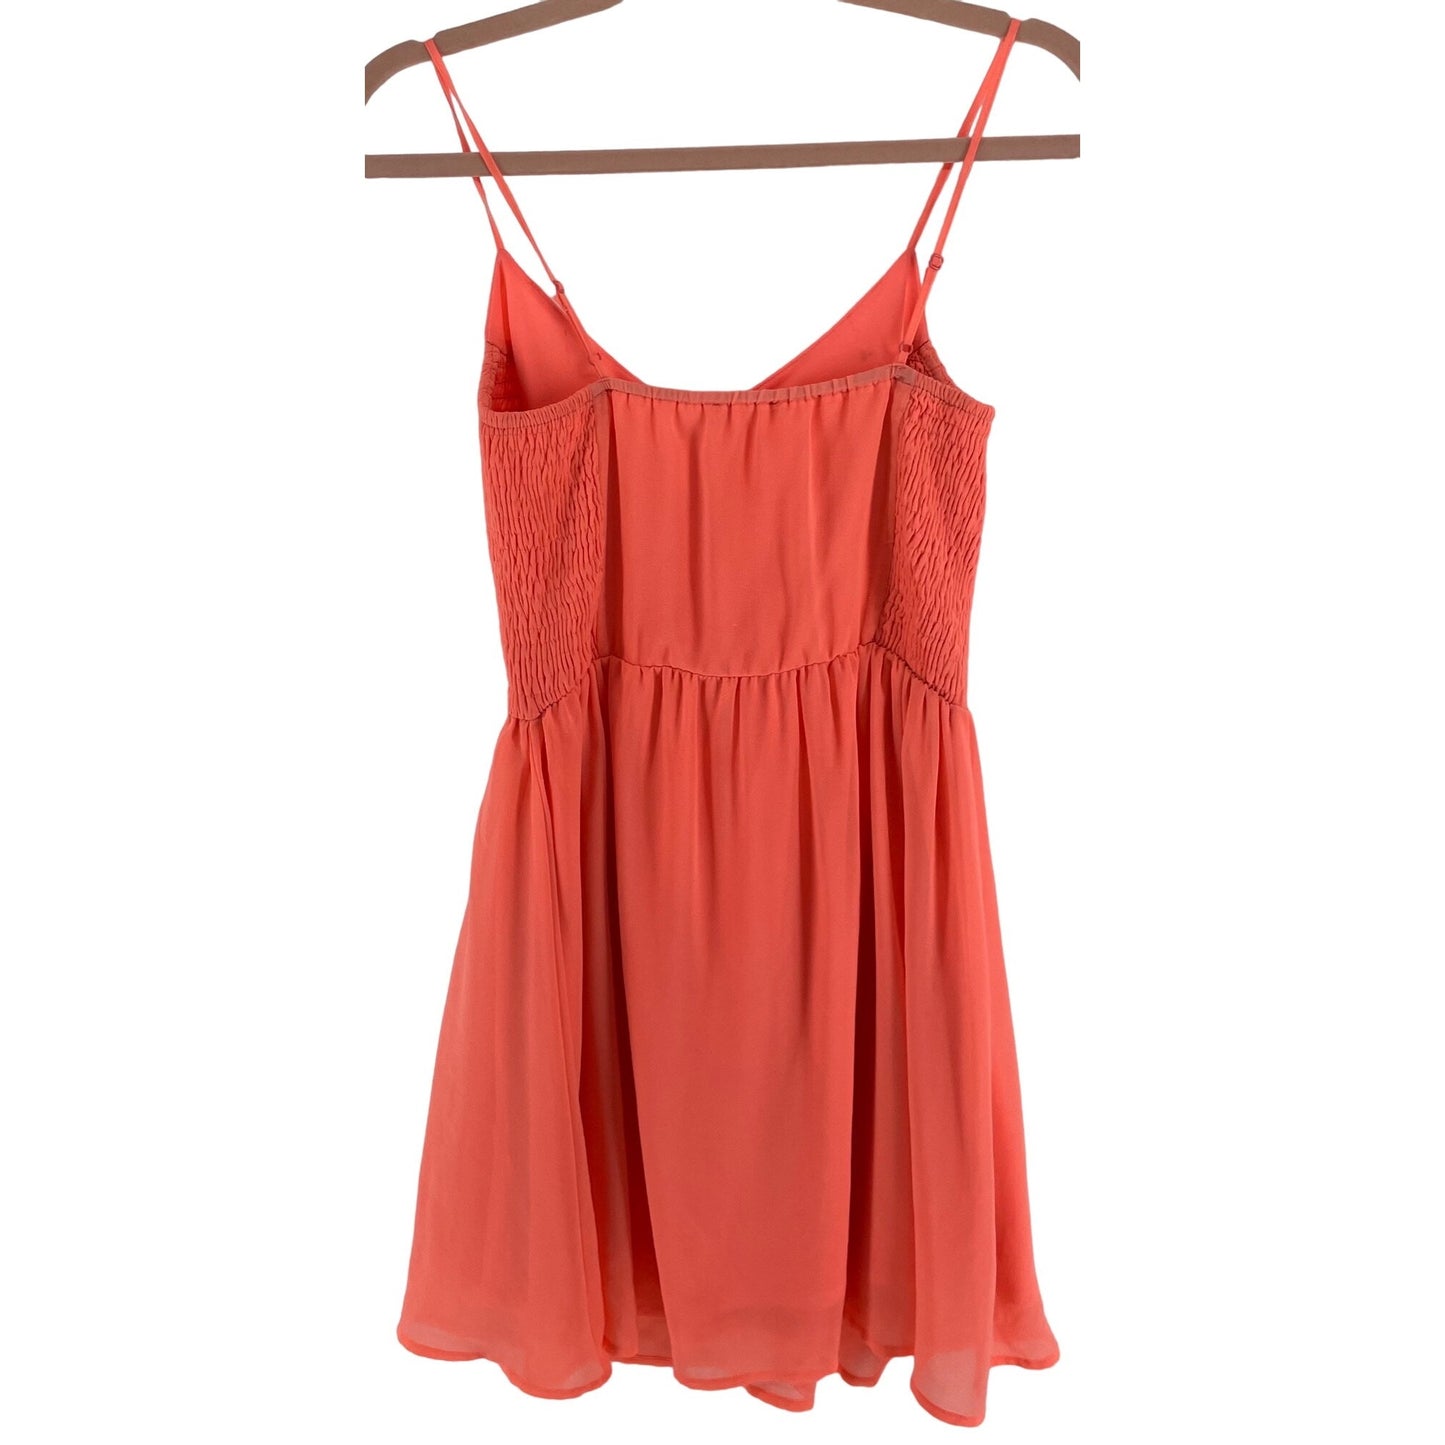 BSK & You Women's Size Small Neon Pinkish/Orange Spaghetti Strap Mini Dress